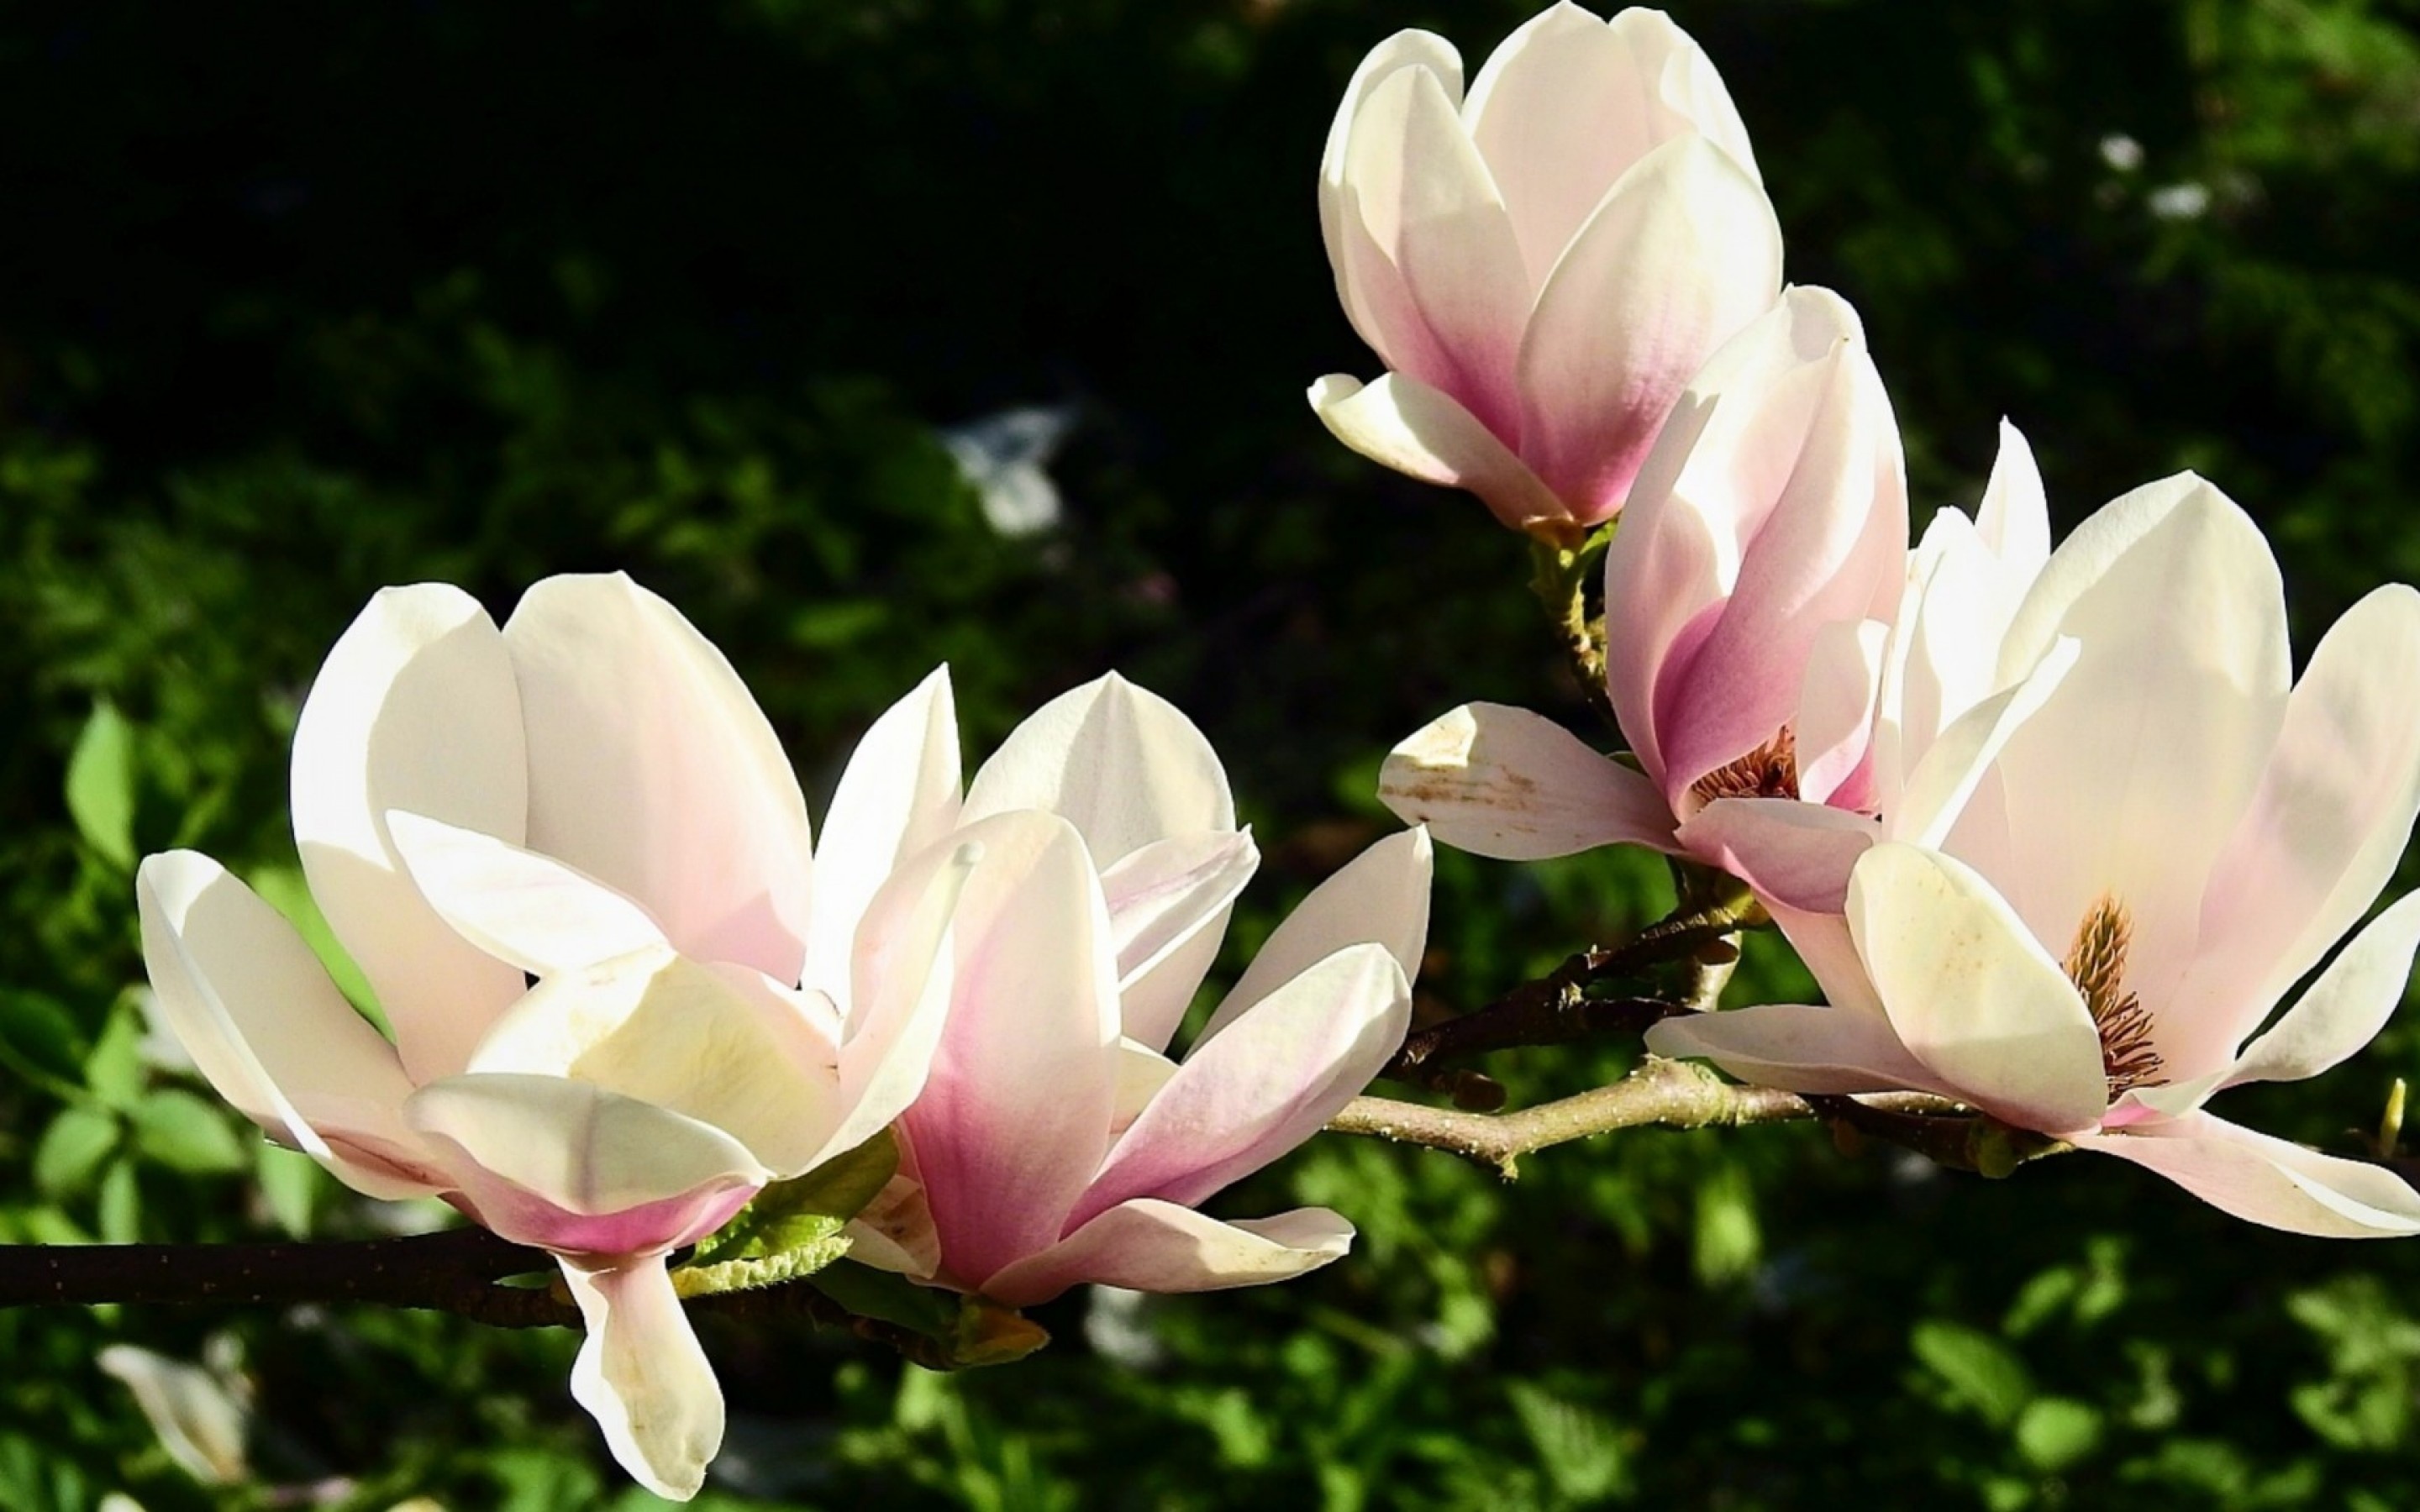 Magnolia HD wallpaper, High resolution, Detailed petals, Floral beauty, 2880x1800 HD Desktop